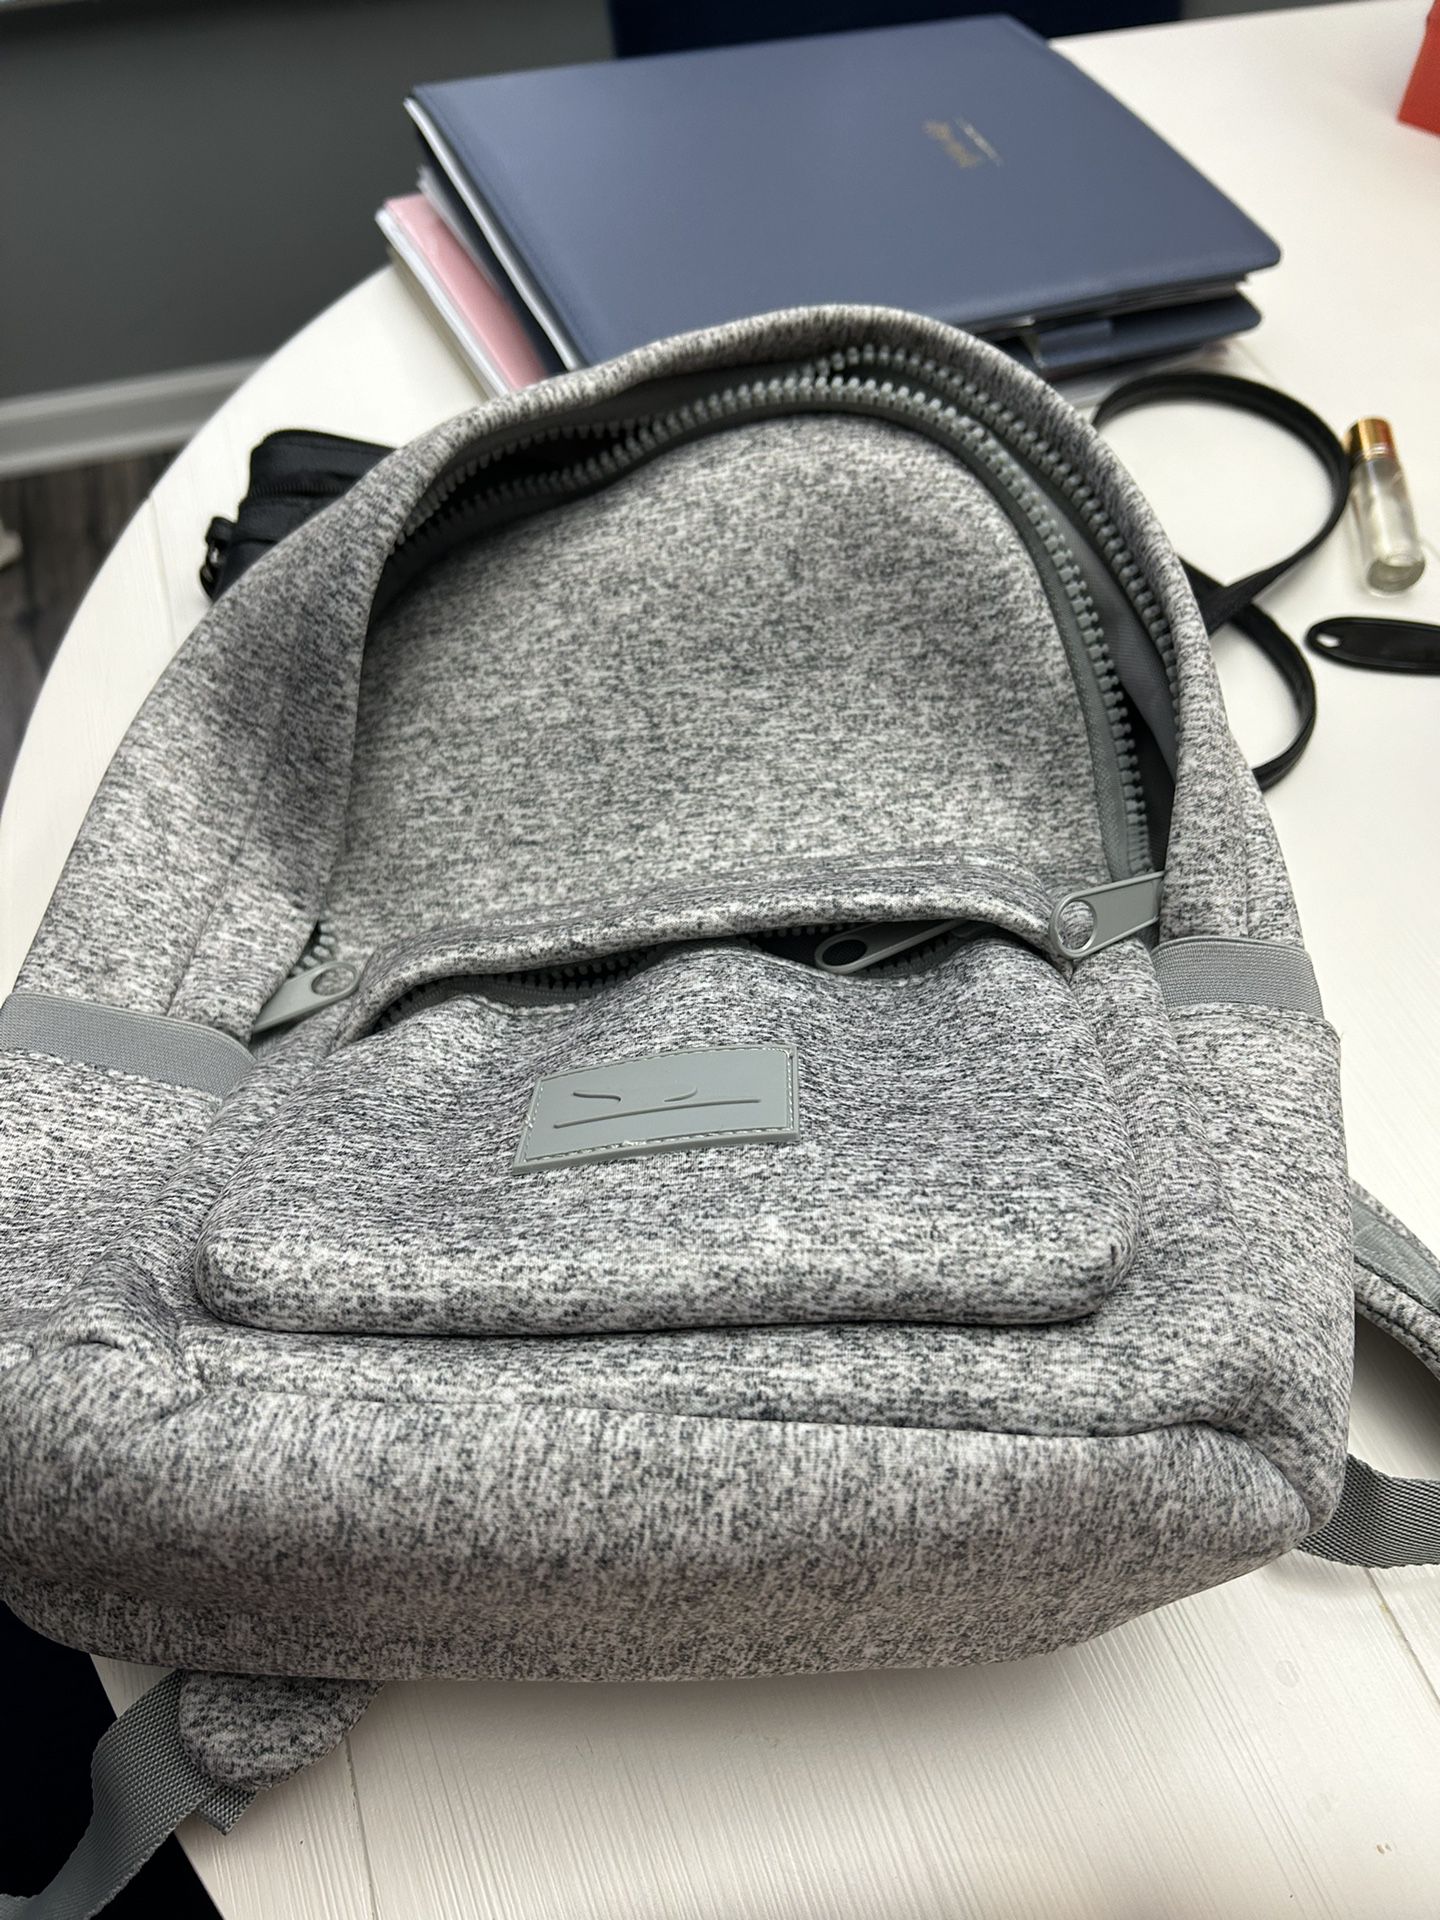 Brand New Gray Backpack